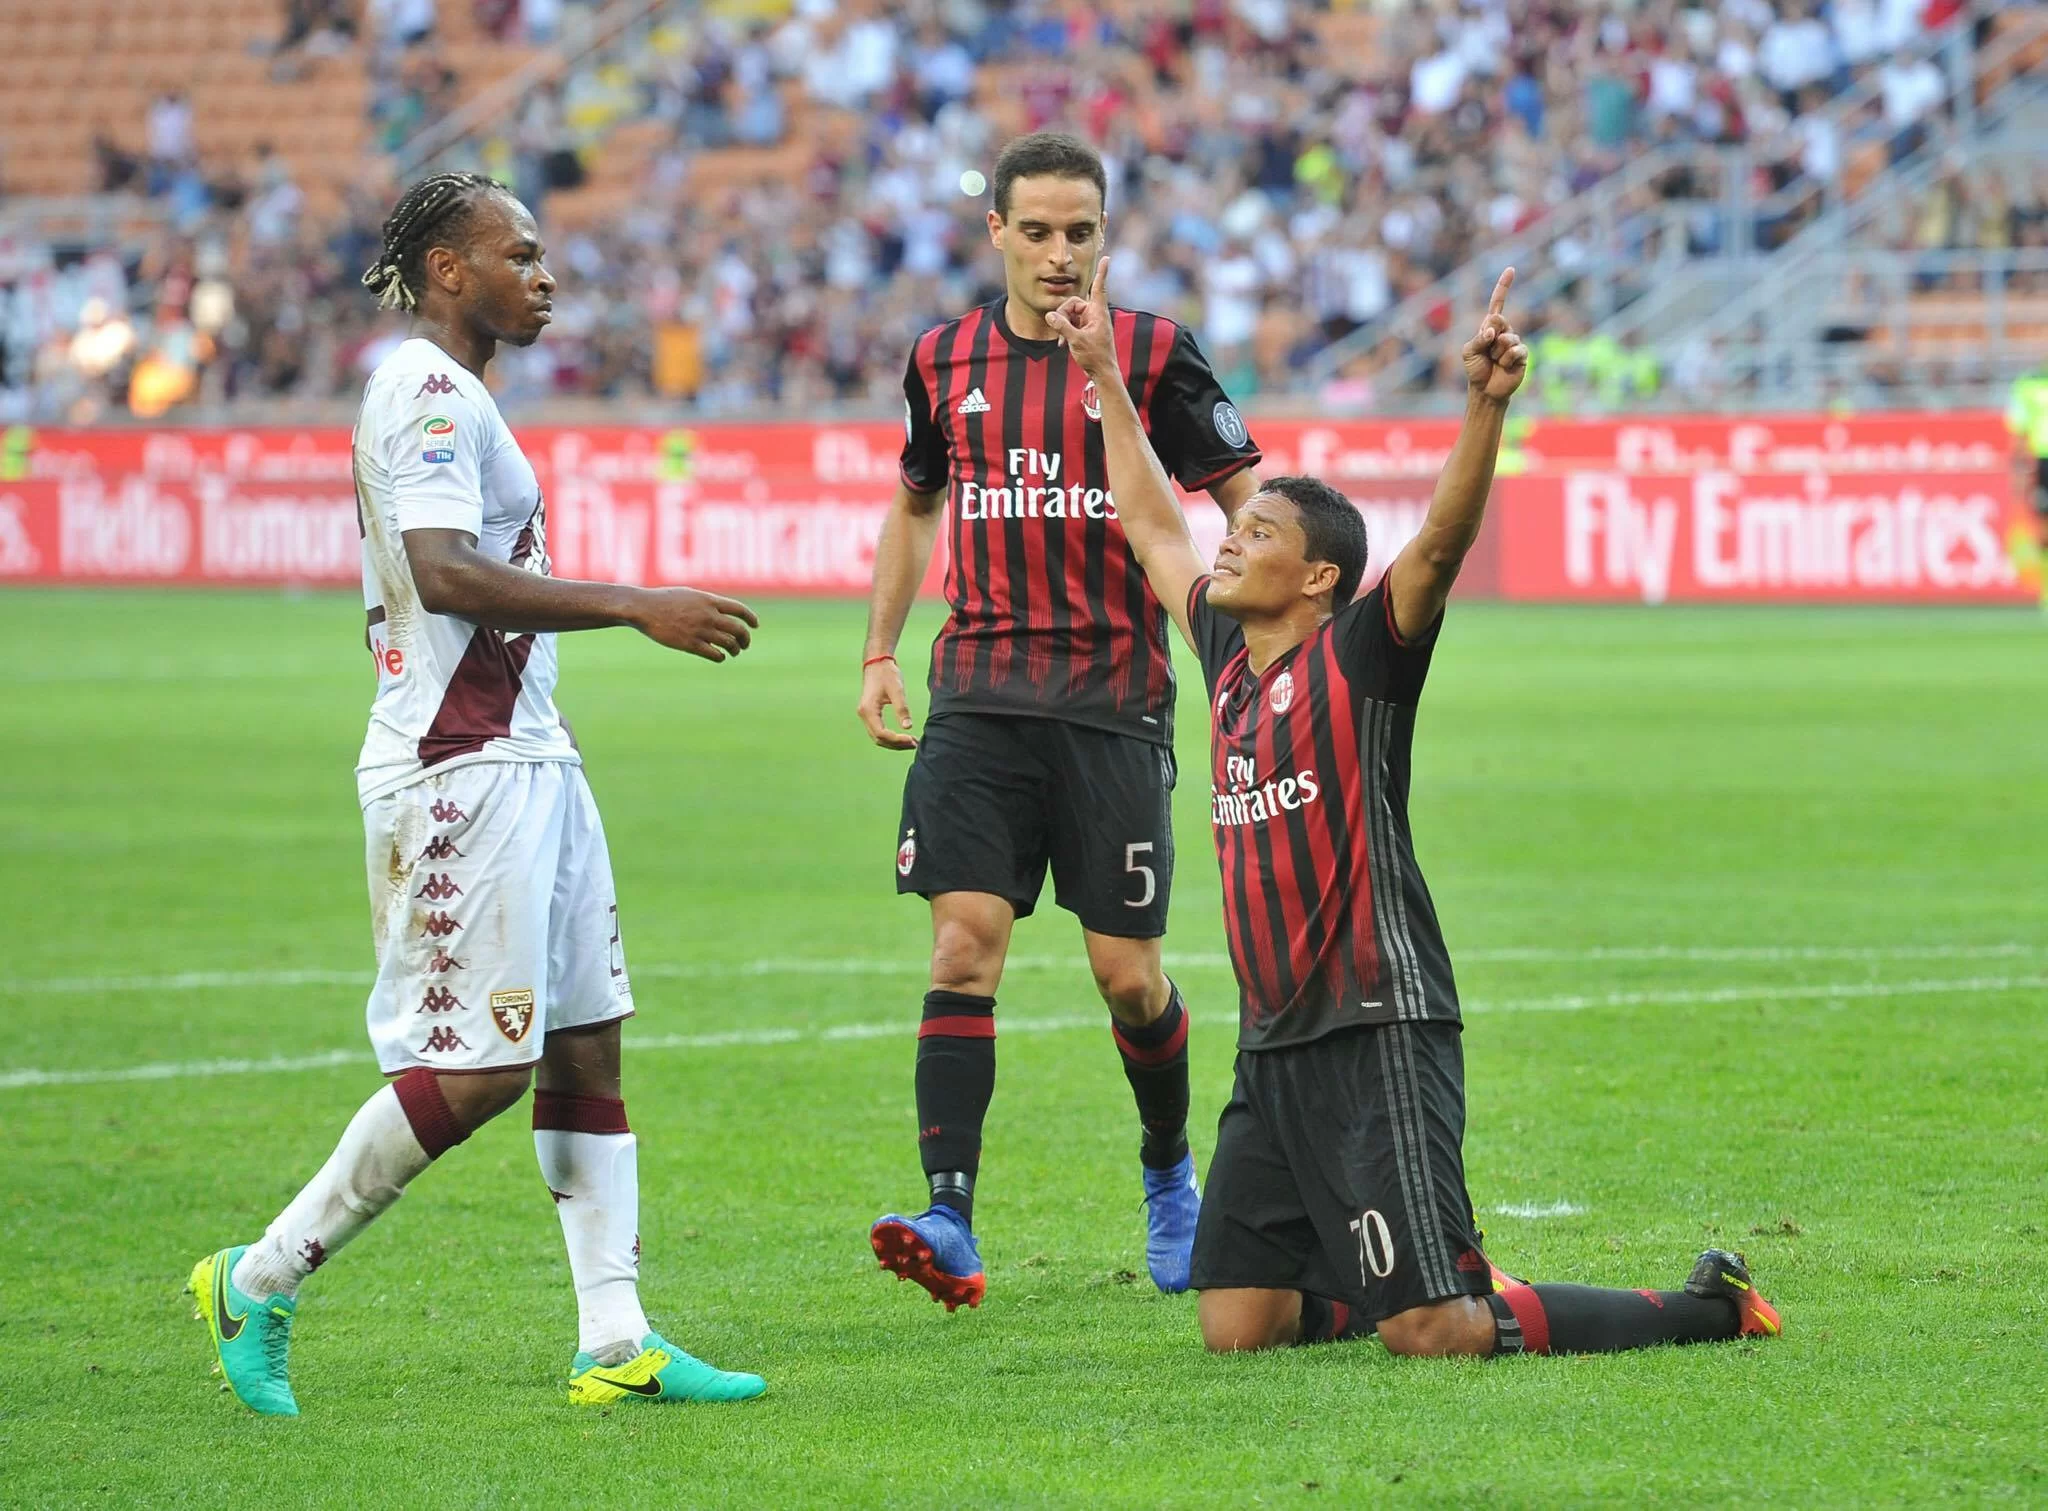 Acmilan.com, season review: Milan-Torino 3-2